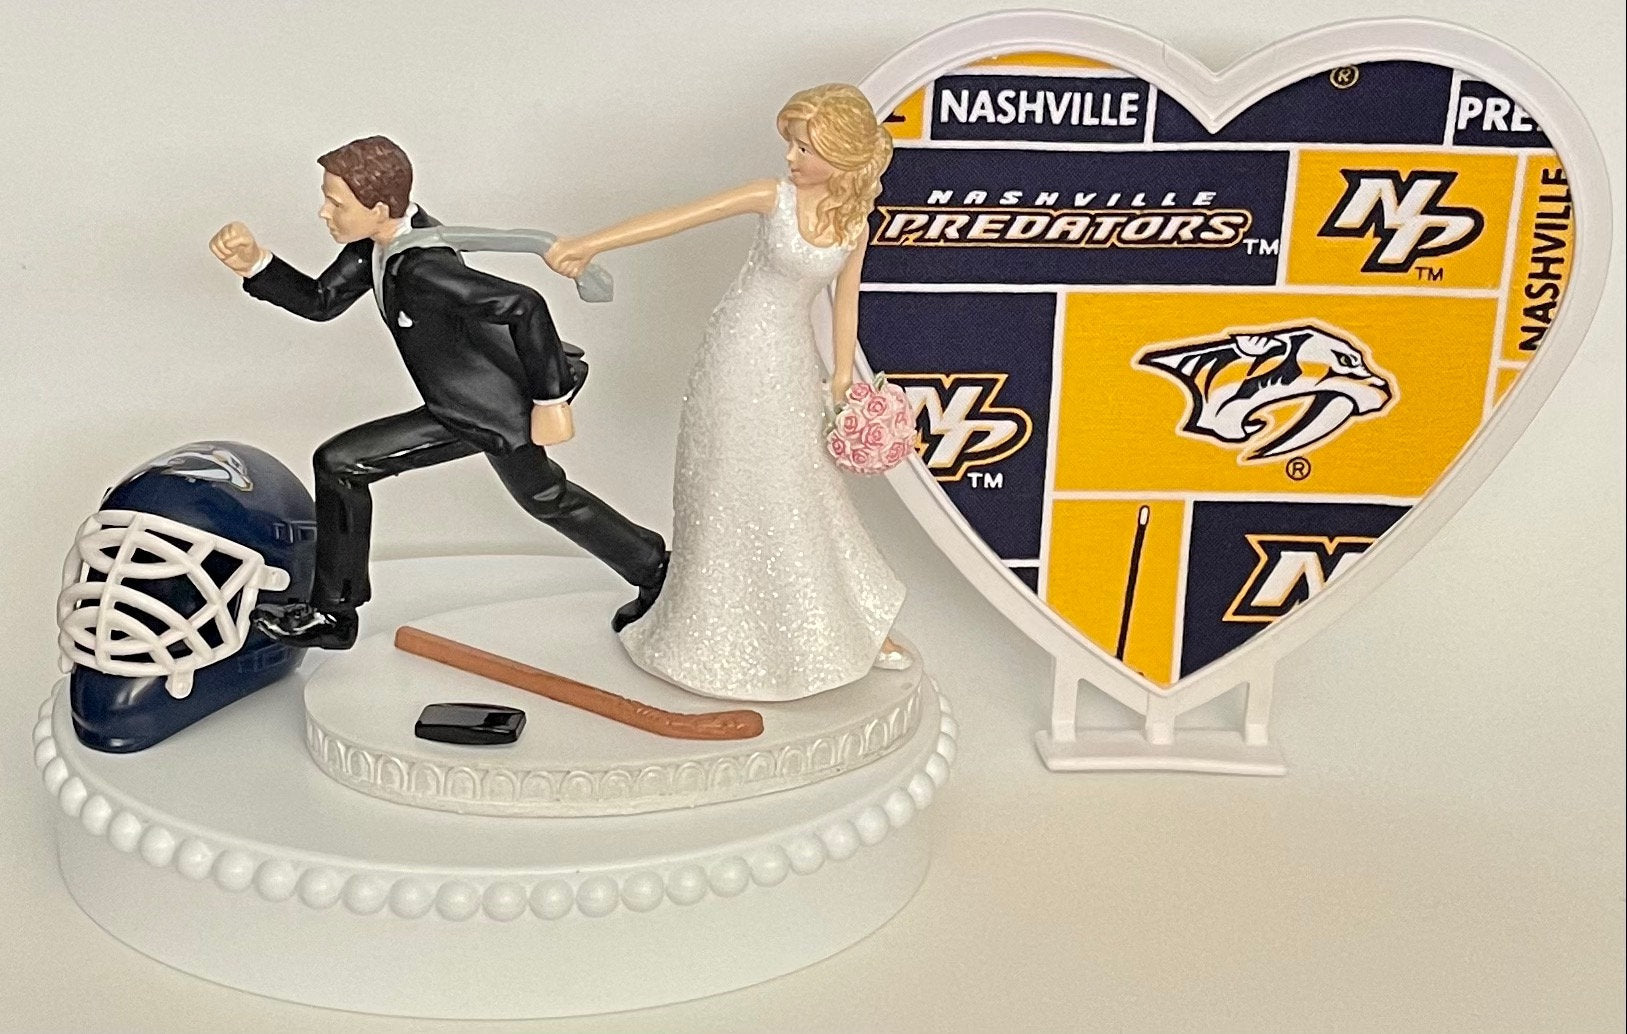 Wedding Cake Topper Nashville Predators Hockey Themed Running Funny Humorous Bride Groom Preds Sports Fans Reception Fun Groom's Cake Top